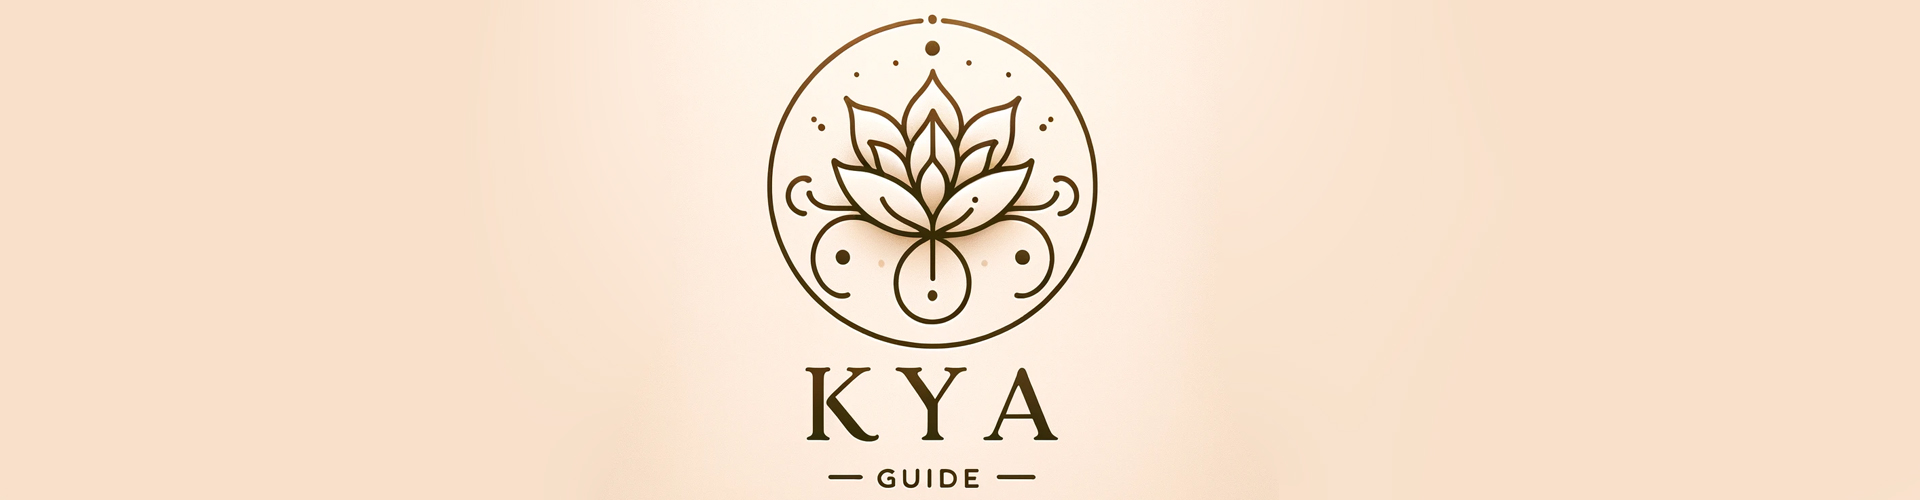 kya-guide-